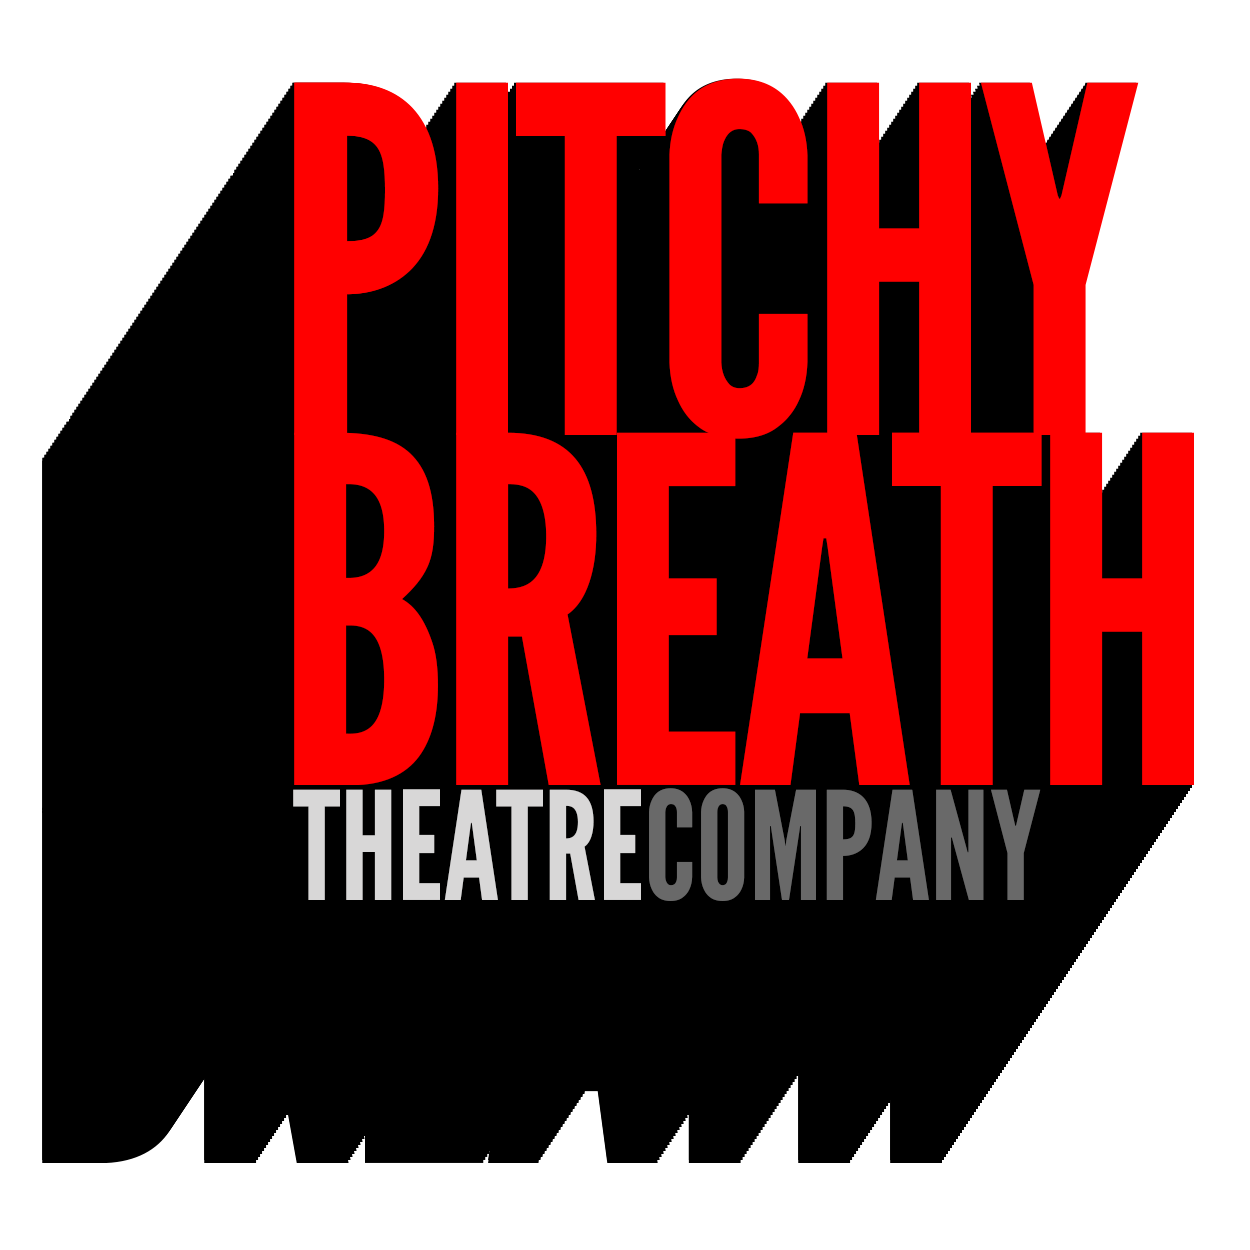 Pitchy Breath Theatre Company